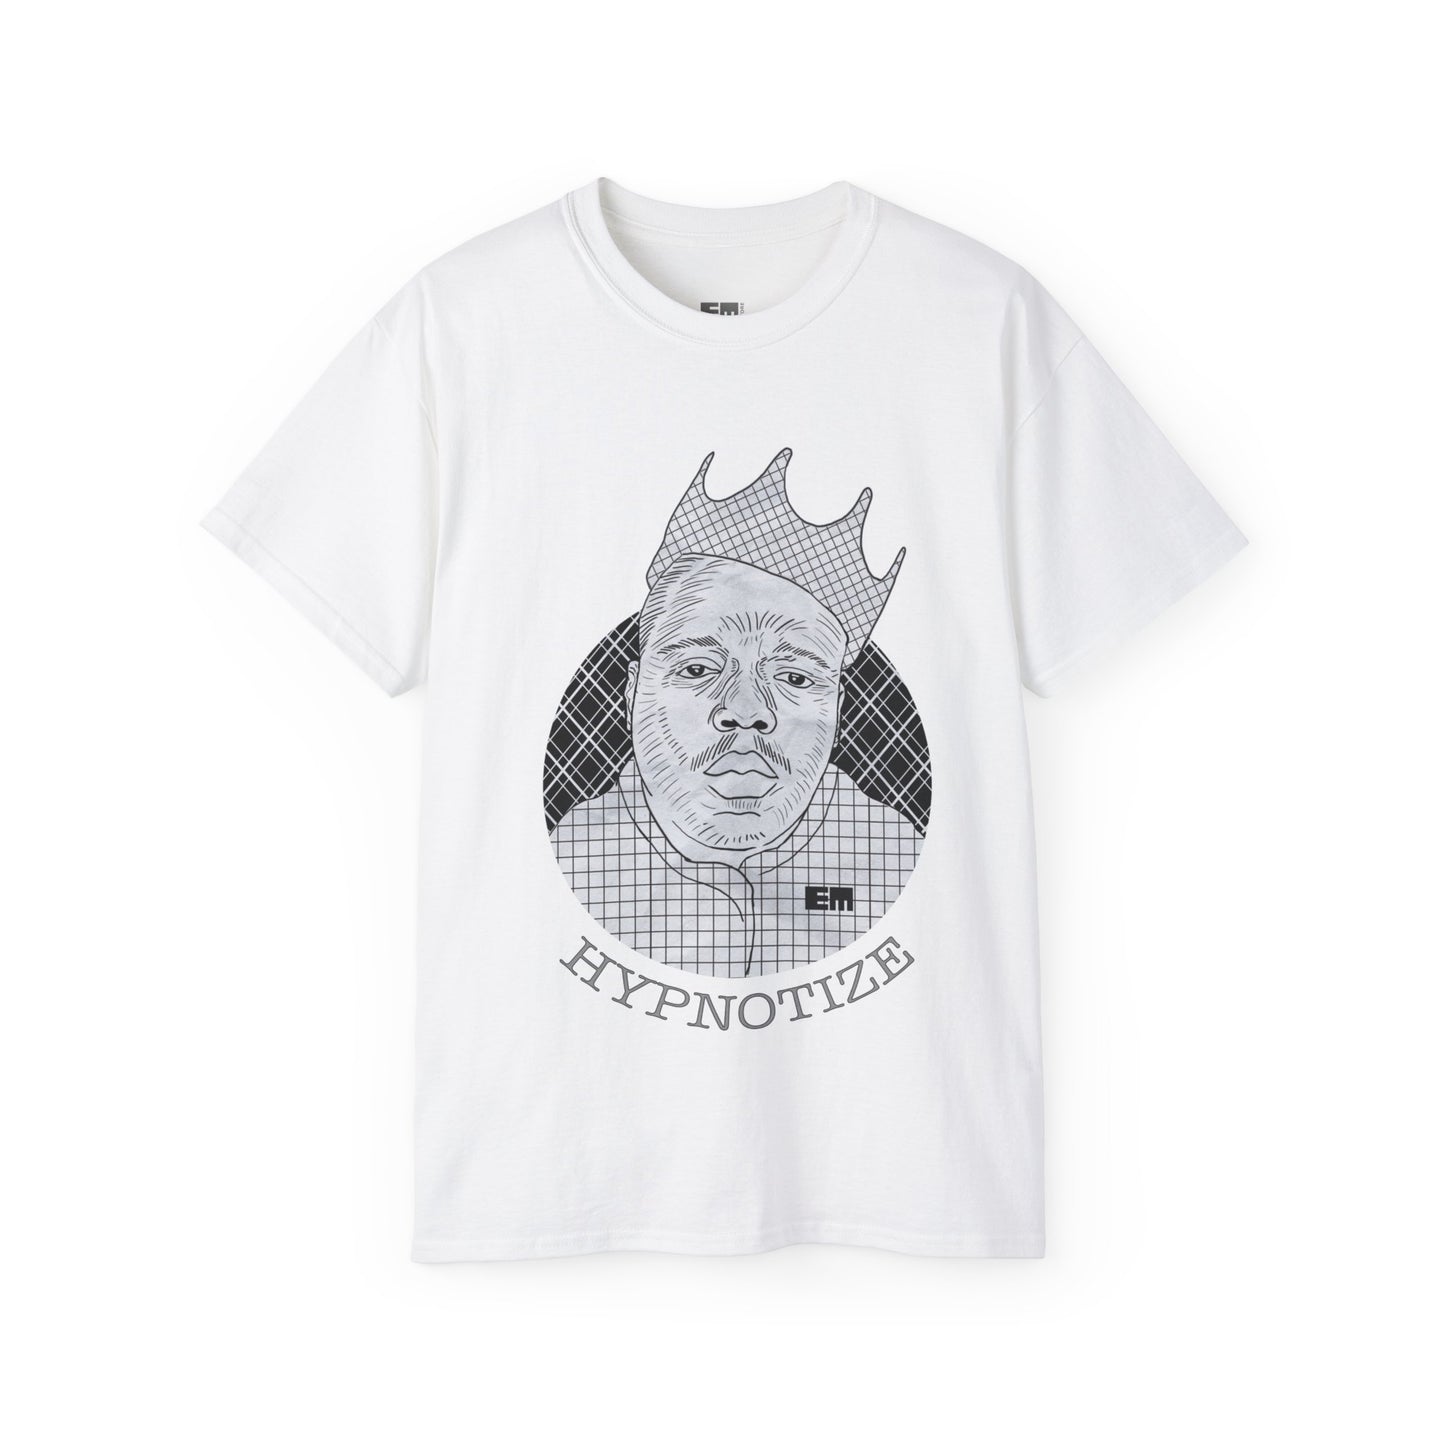 T-shirt Notorious B.I.G. "Hypnotize"